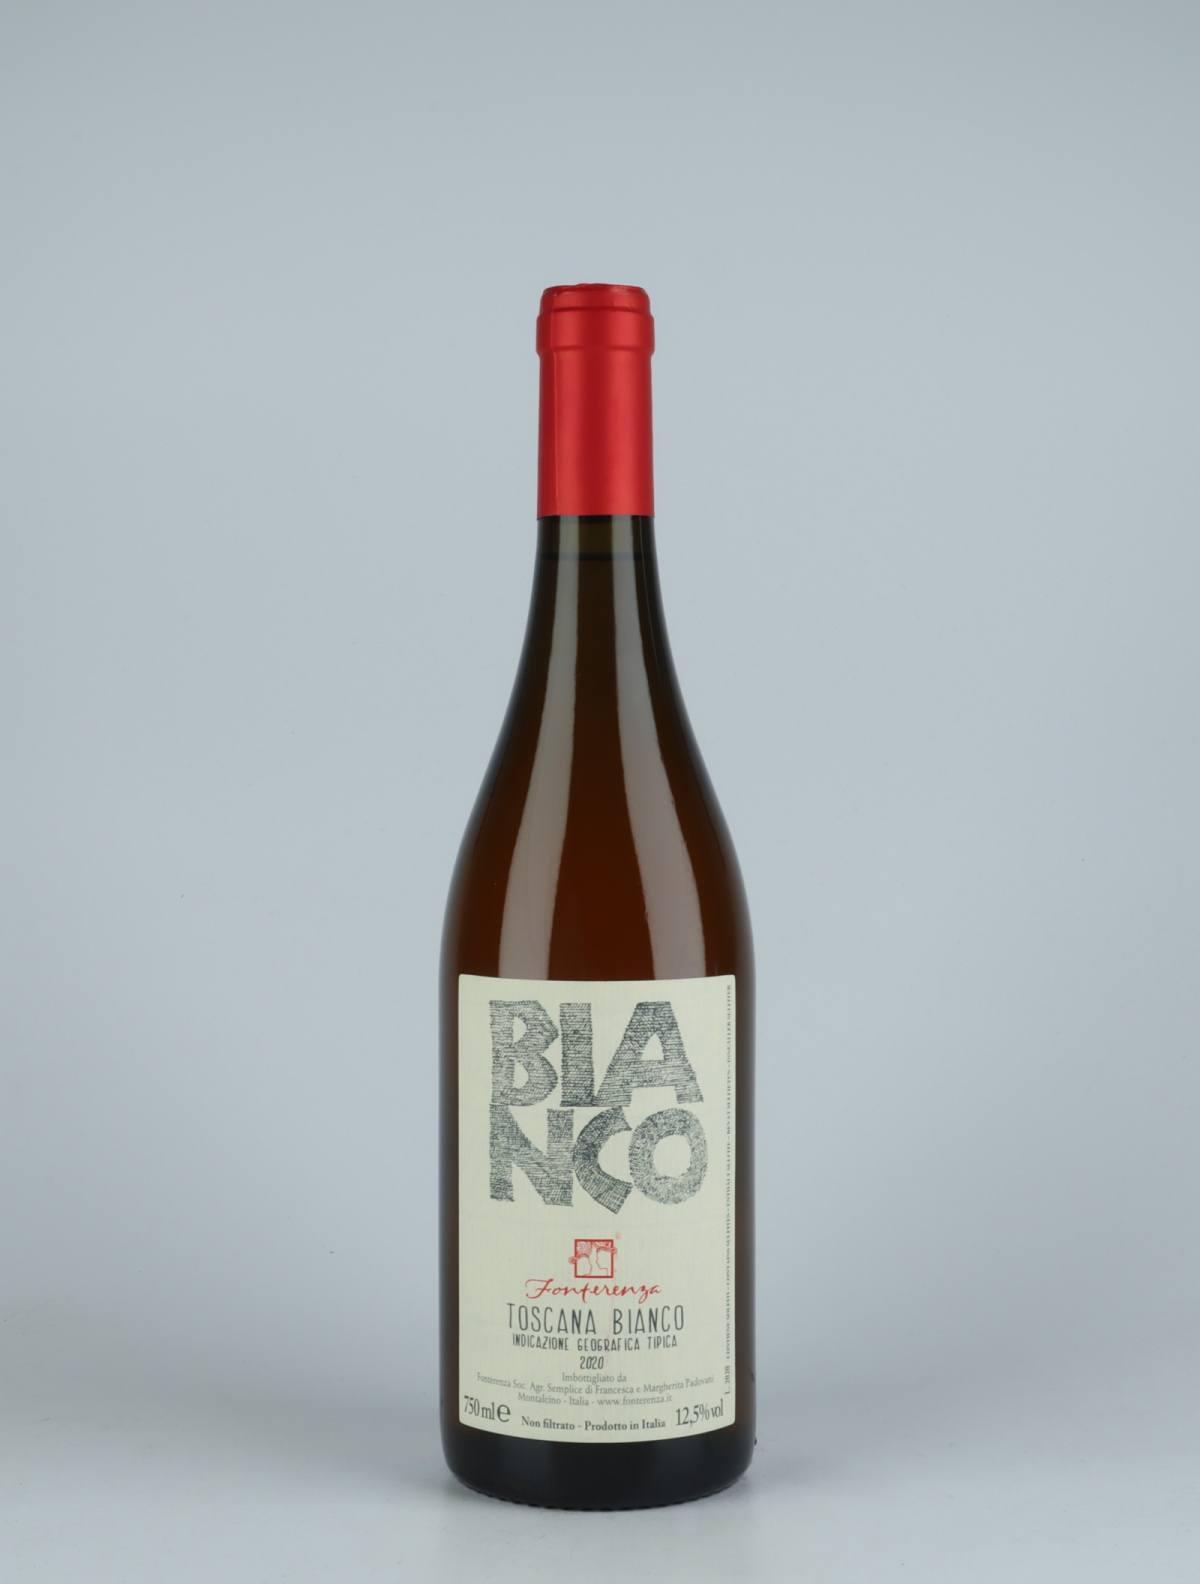 A bottle 2020 Bianco Orange wine from Fonterenza, Tuscany in Italy